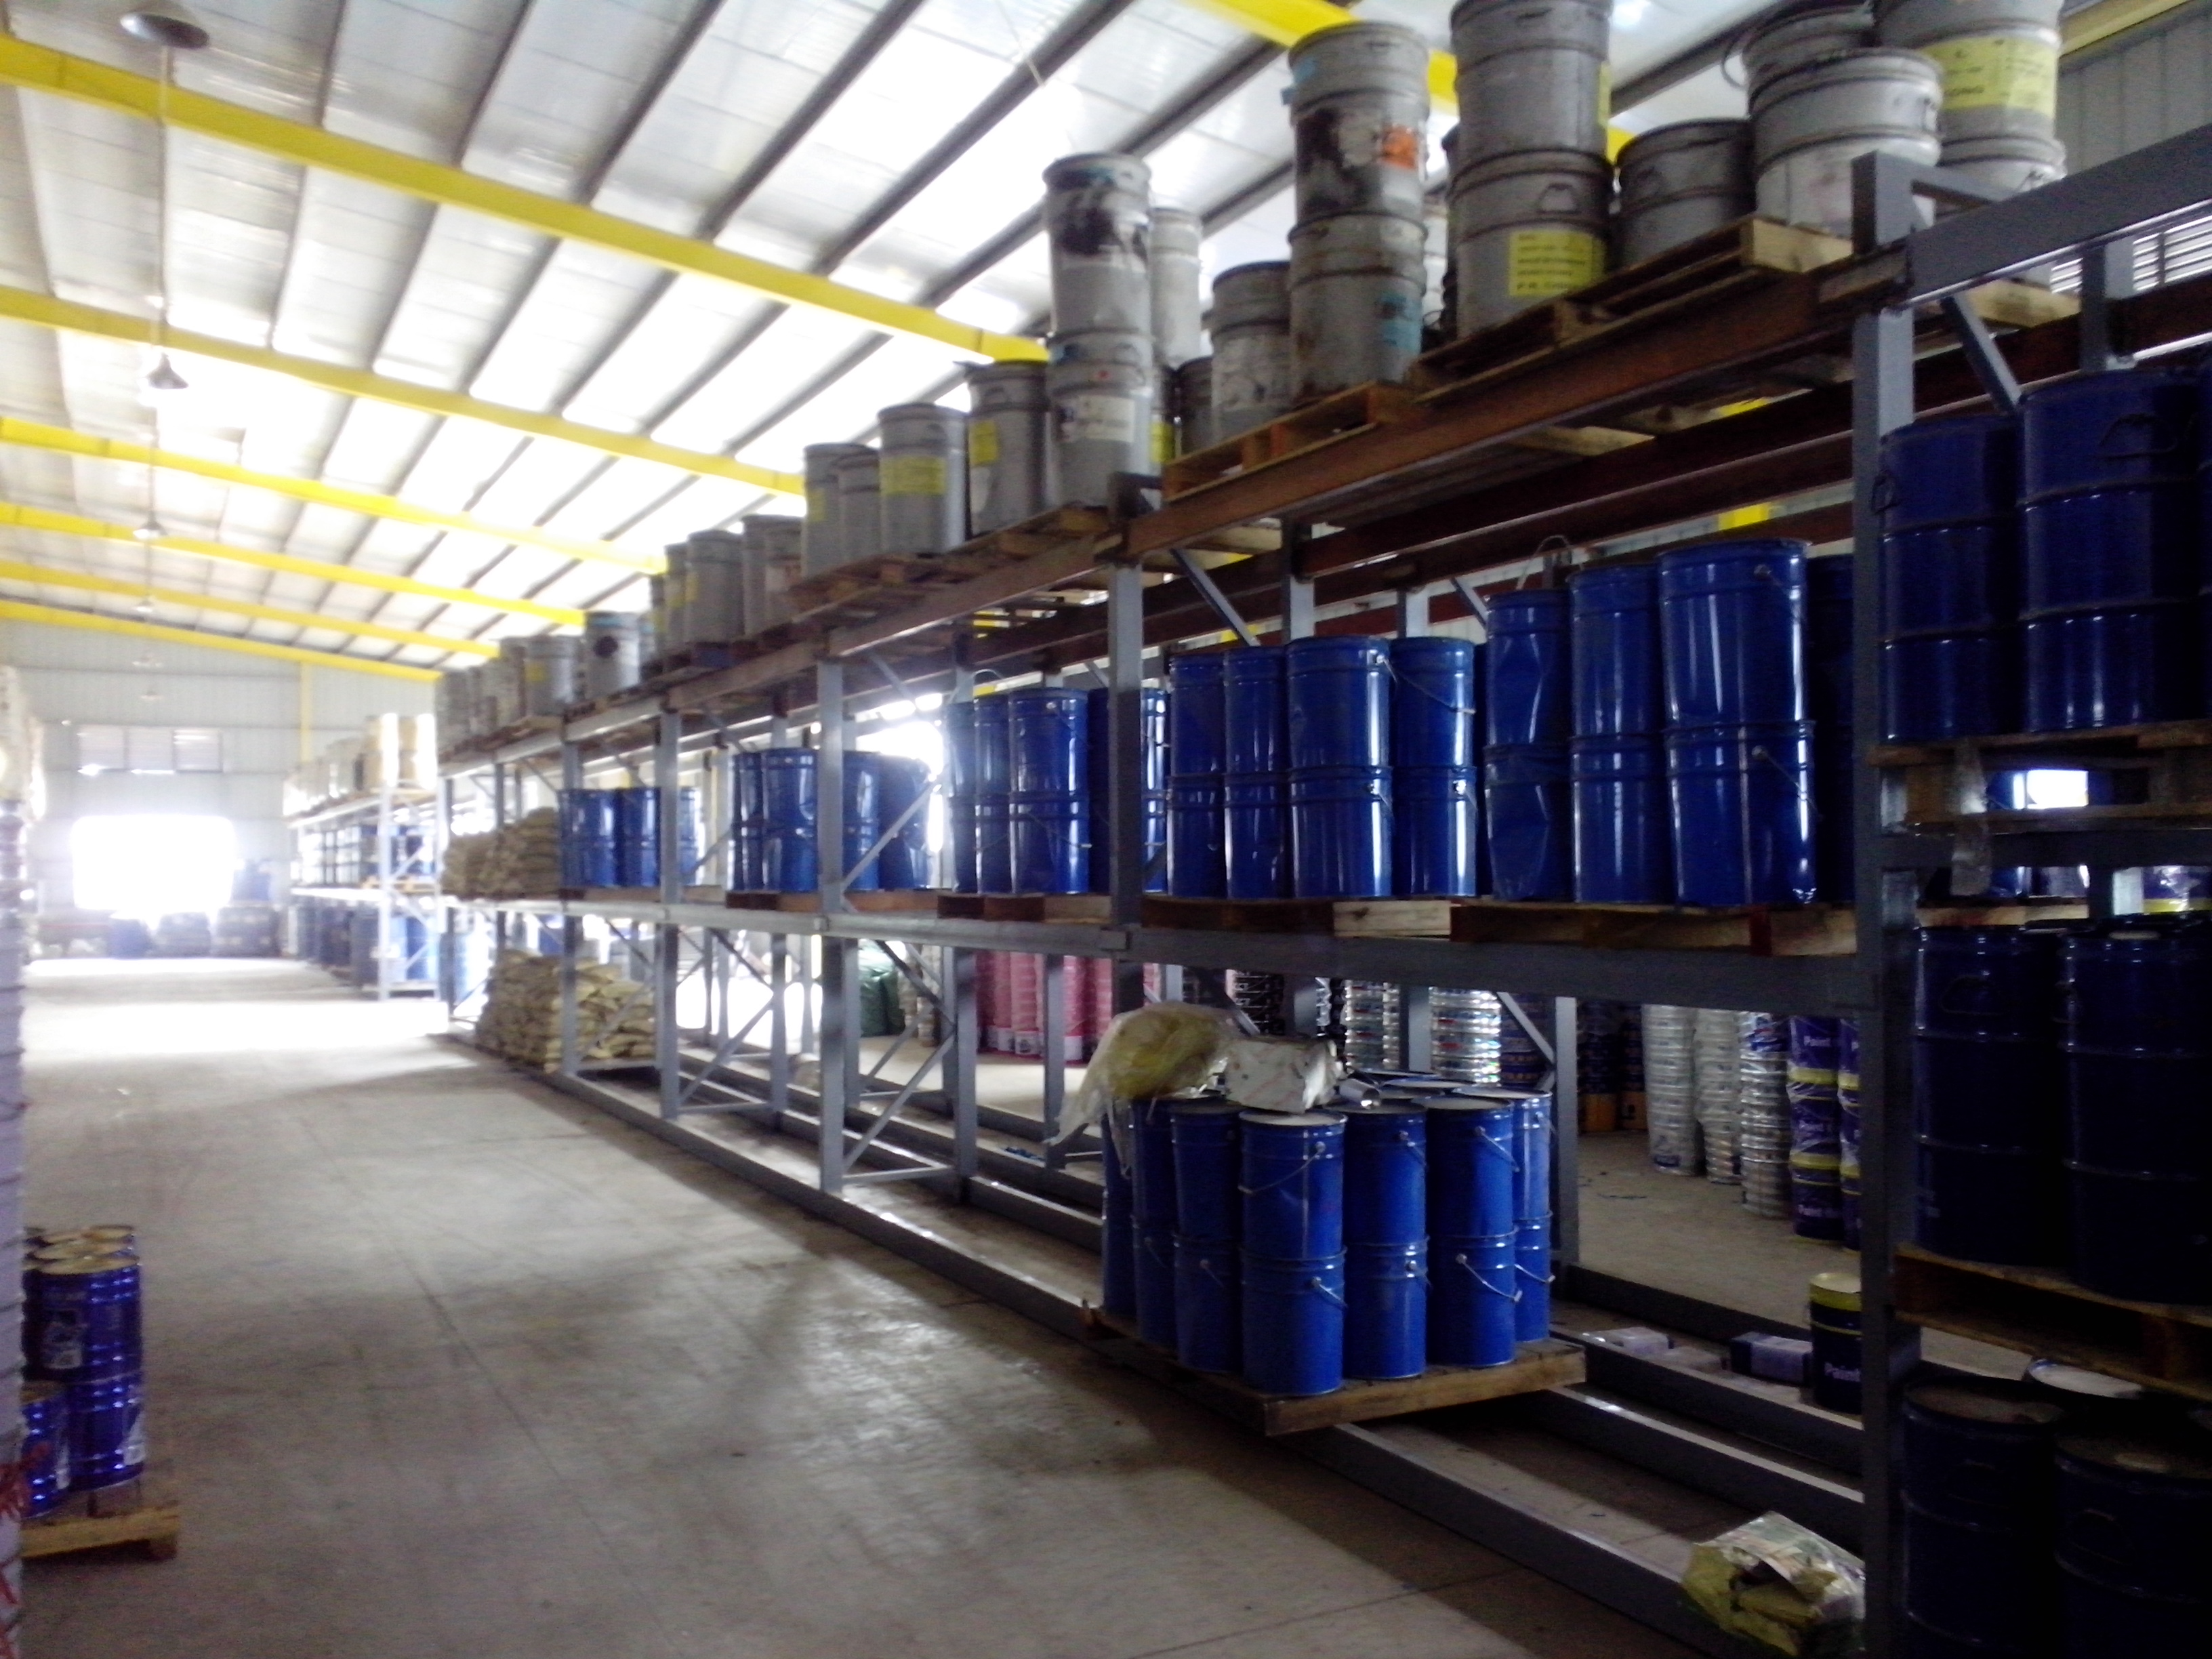 E777-10乳液型水性无机富锌厂家多少钱 水性无机富锌树脂厂家